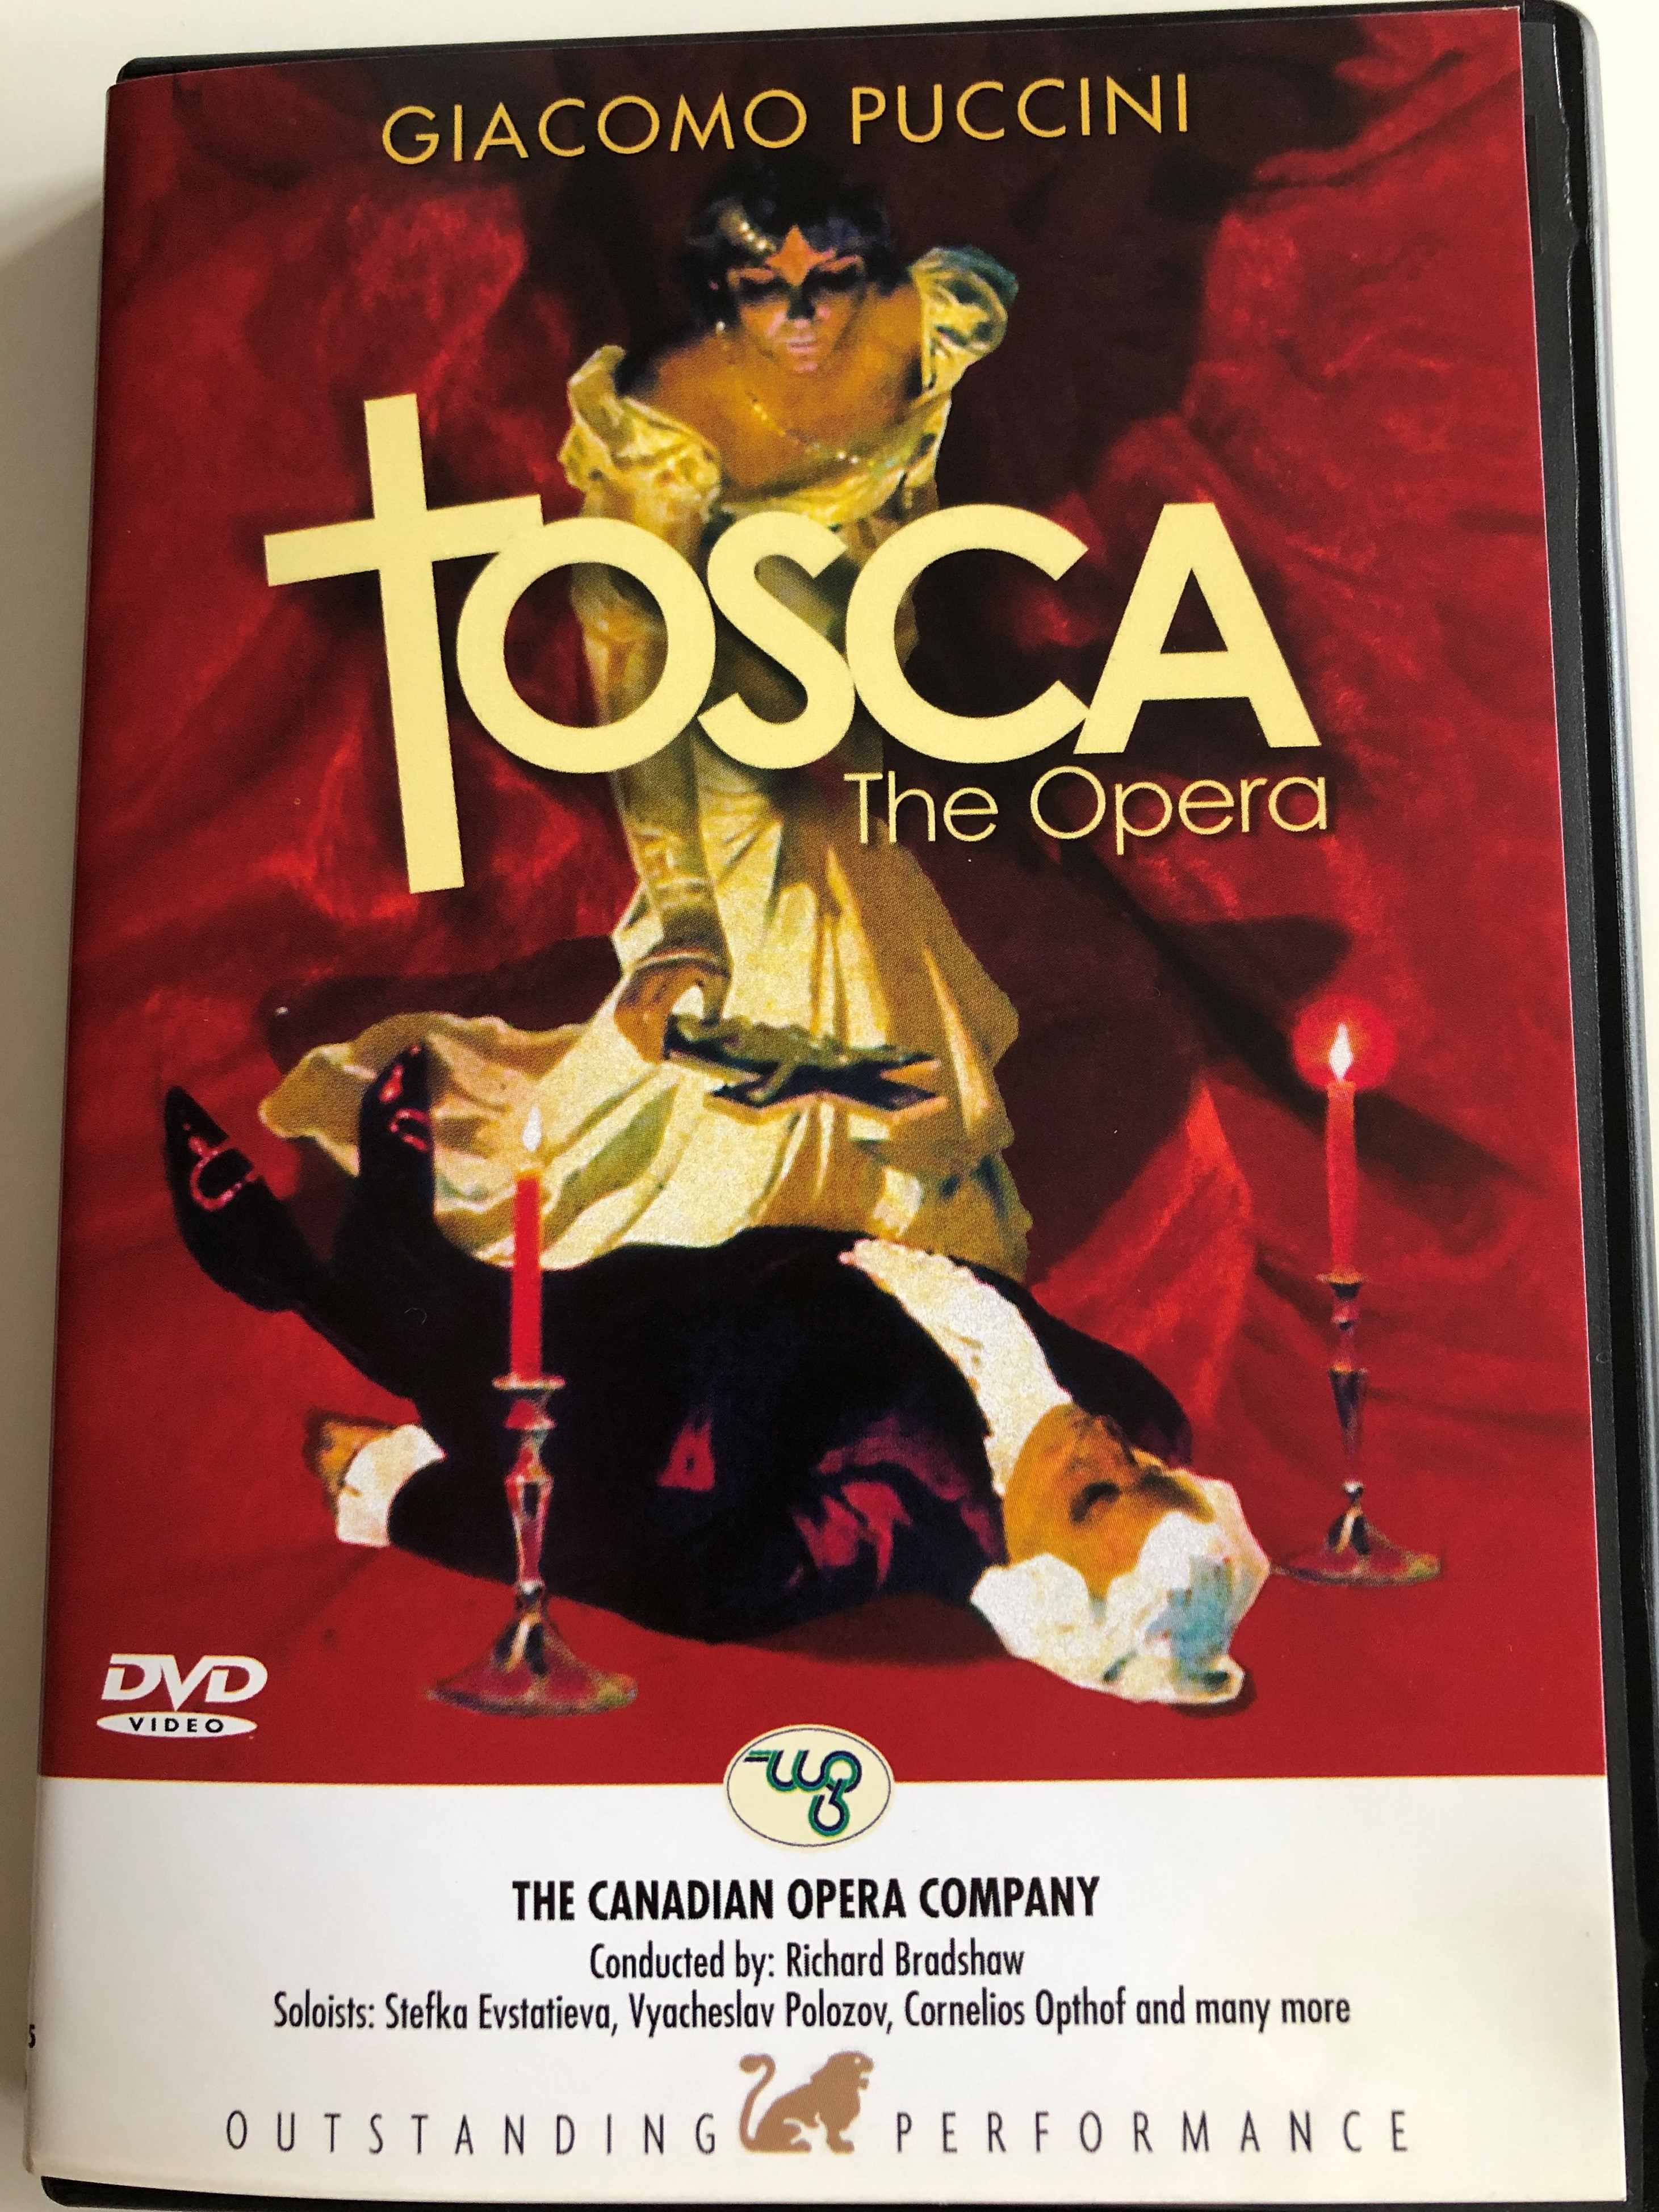 giacomo-puccini-tosca-the-opera-dvd-2006-the-canadian-opera-company-1.jpg